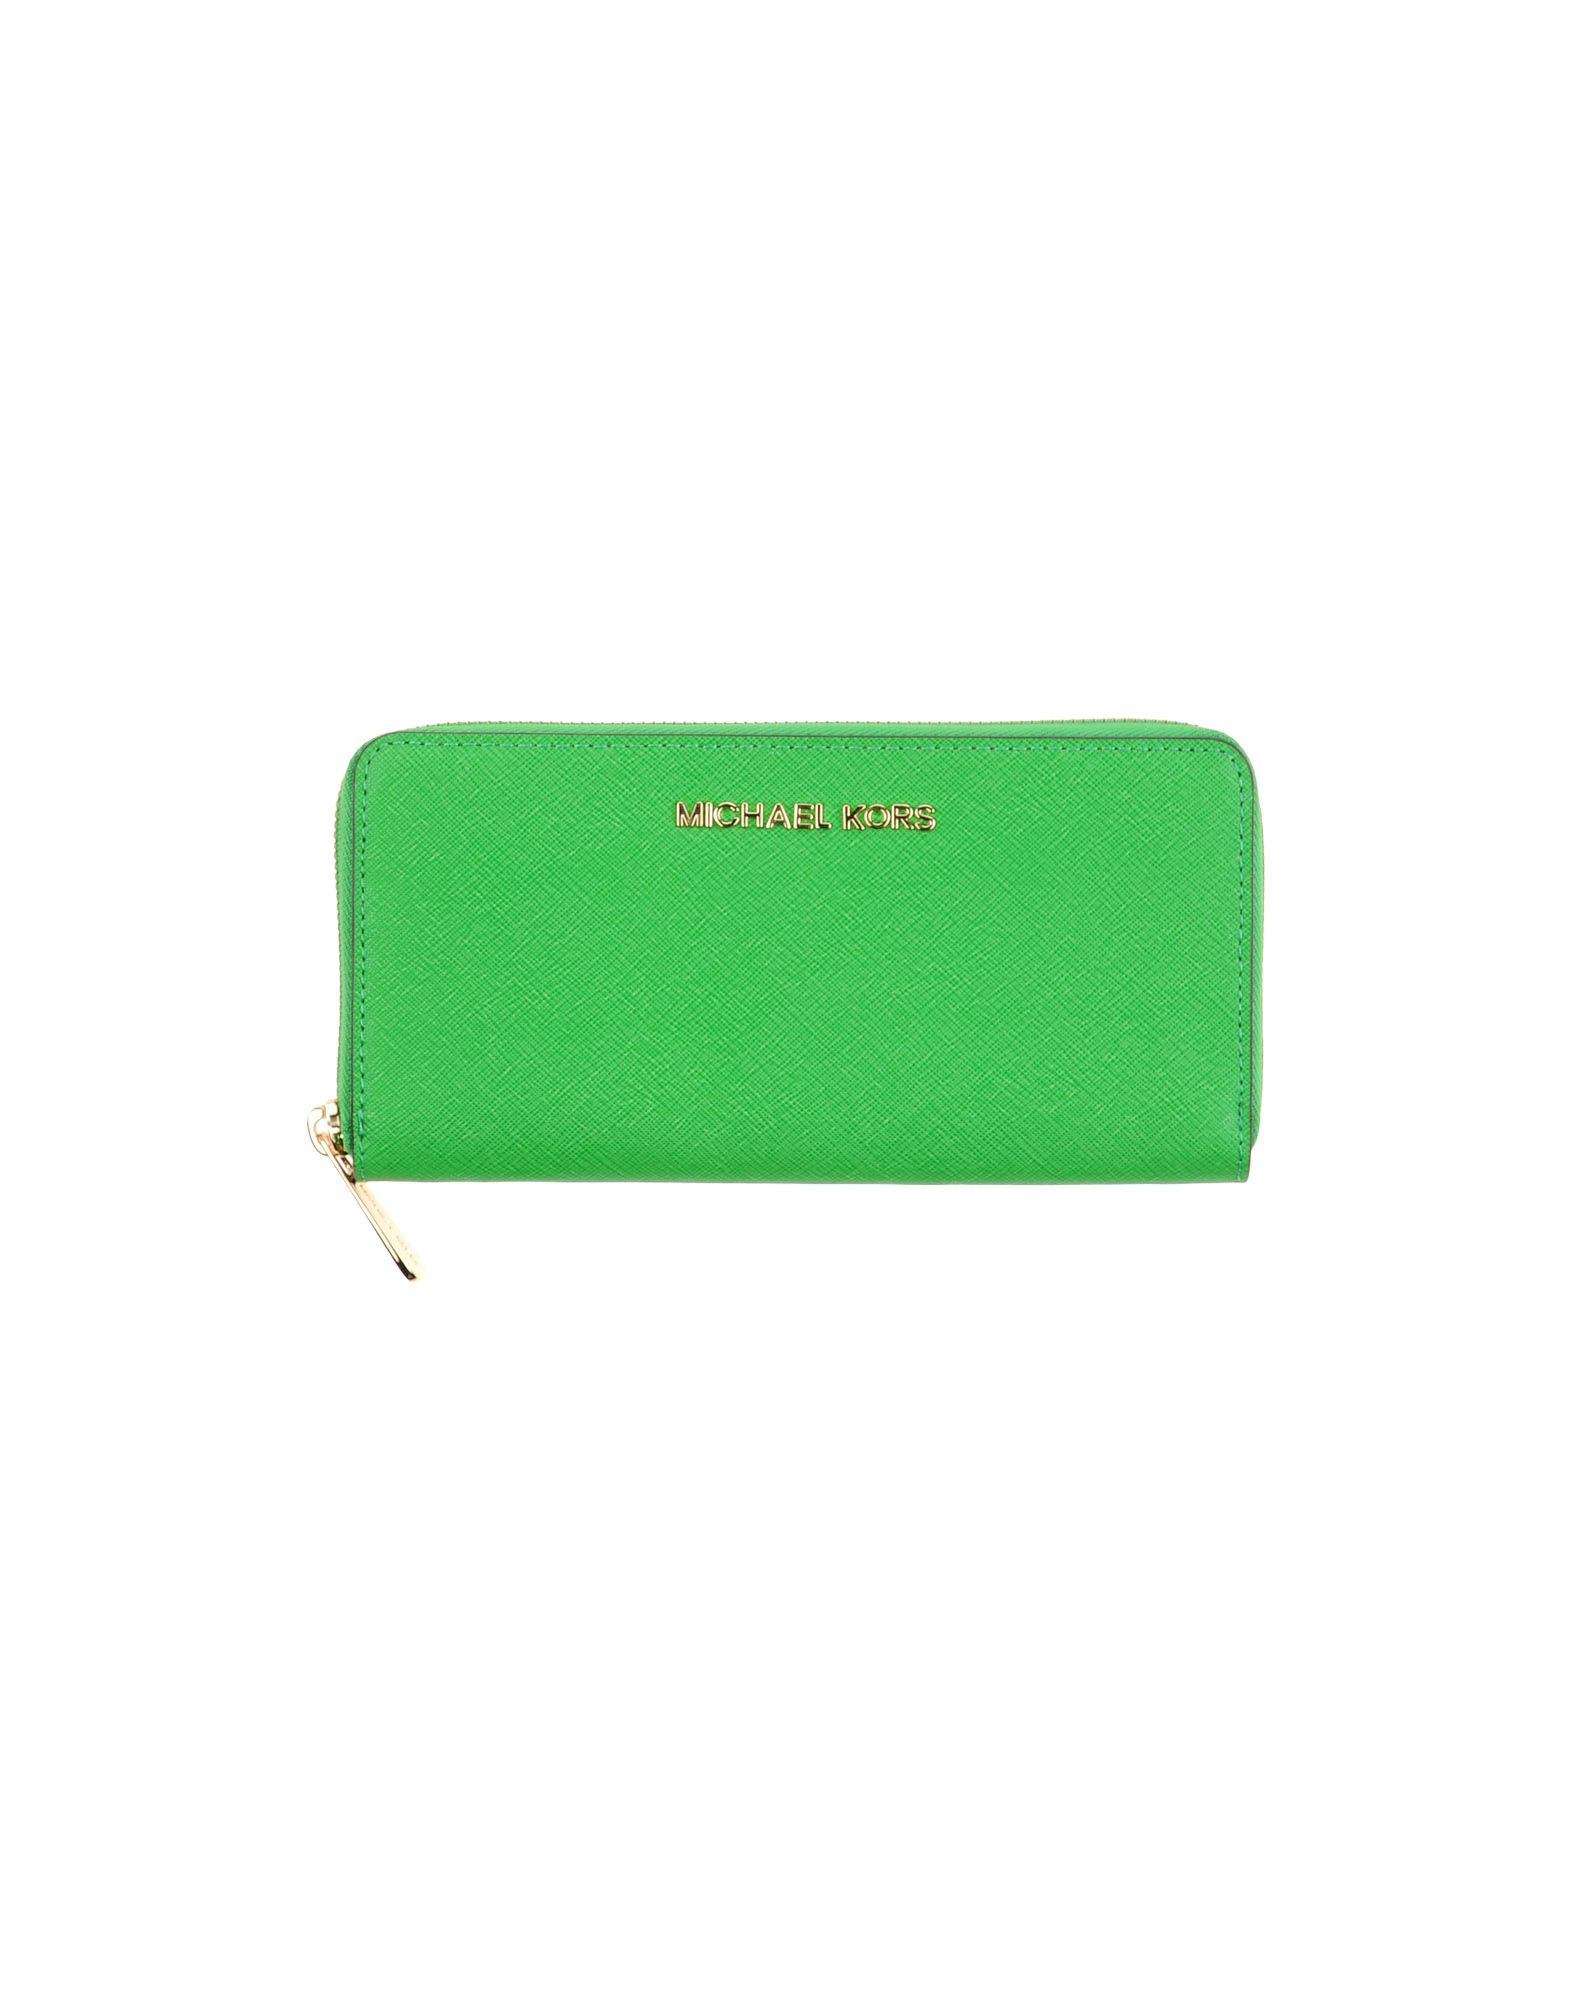 Michael Kors Wallet in Light Green (Green) - Lyst